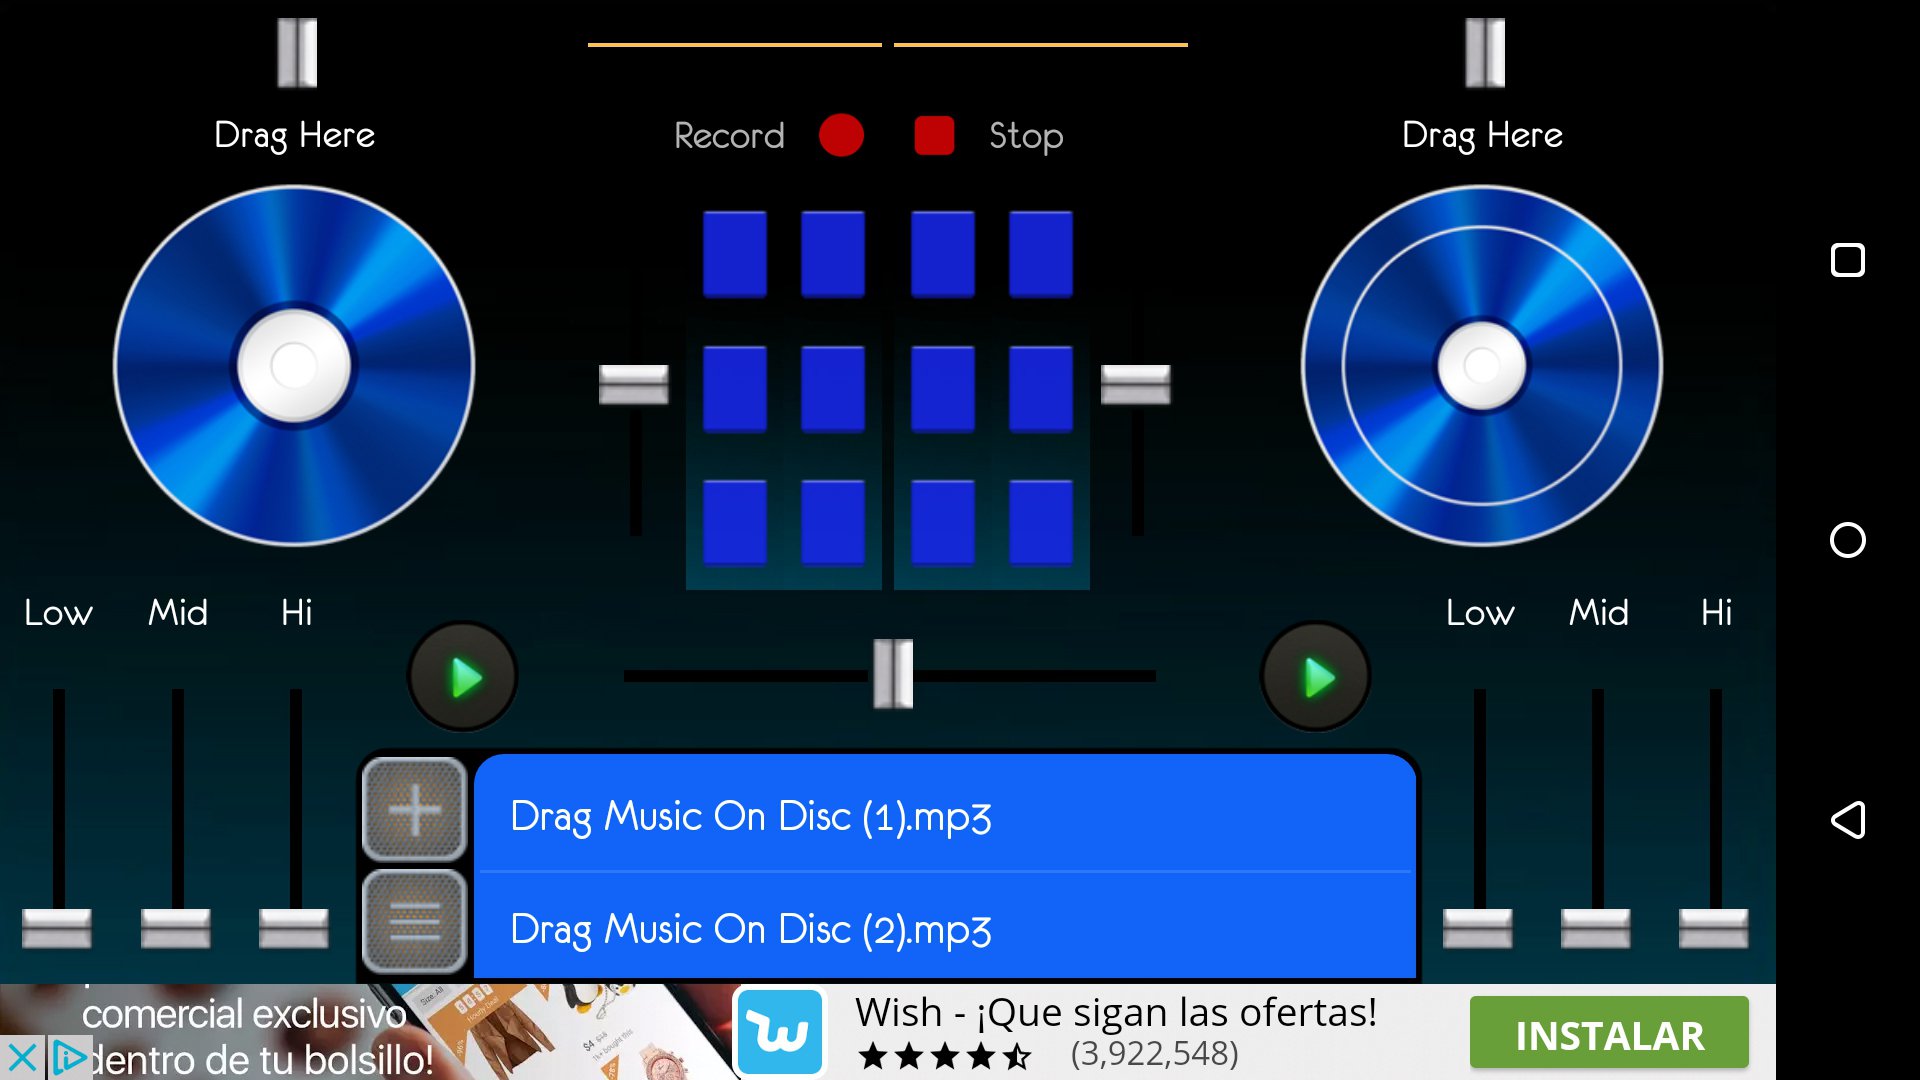 Virtual Dj Mixer Pro Image 2 Thumbnail - Android Dj - 1920x1080 Wallpaper -  